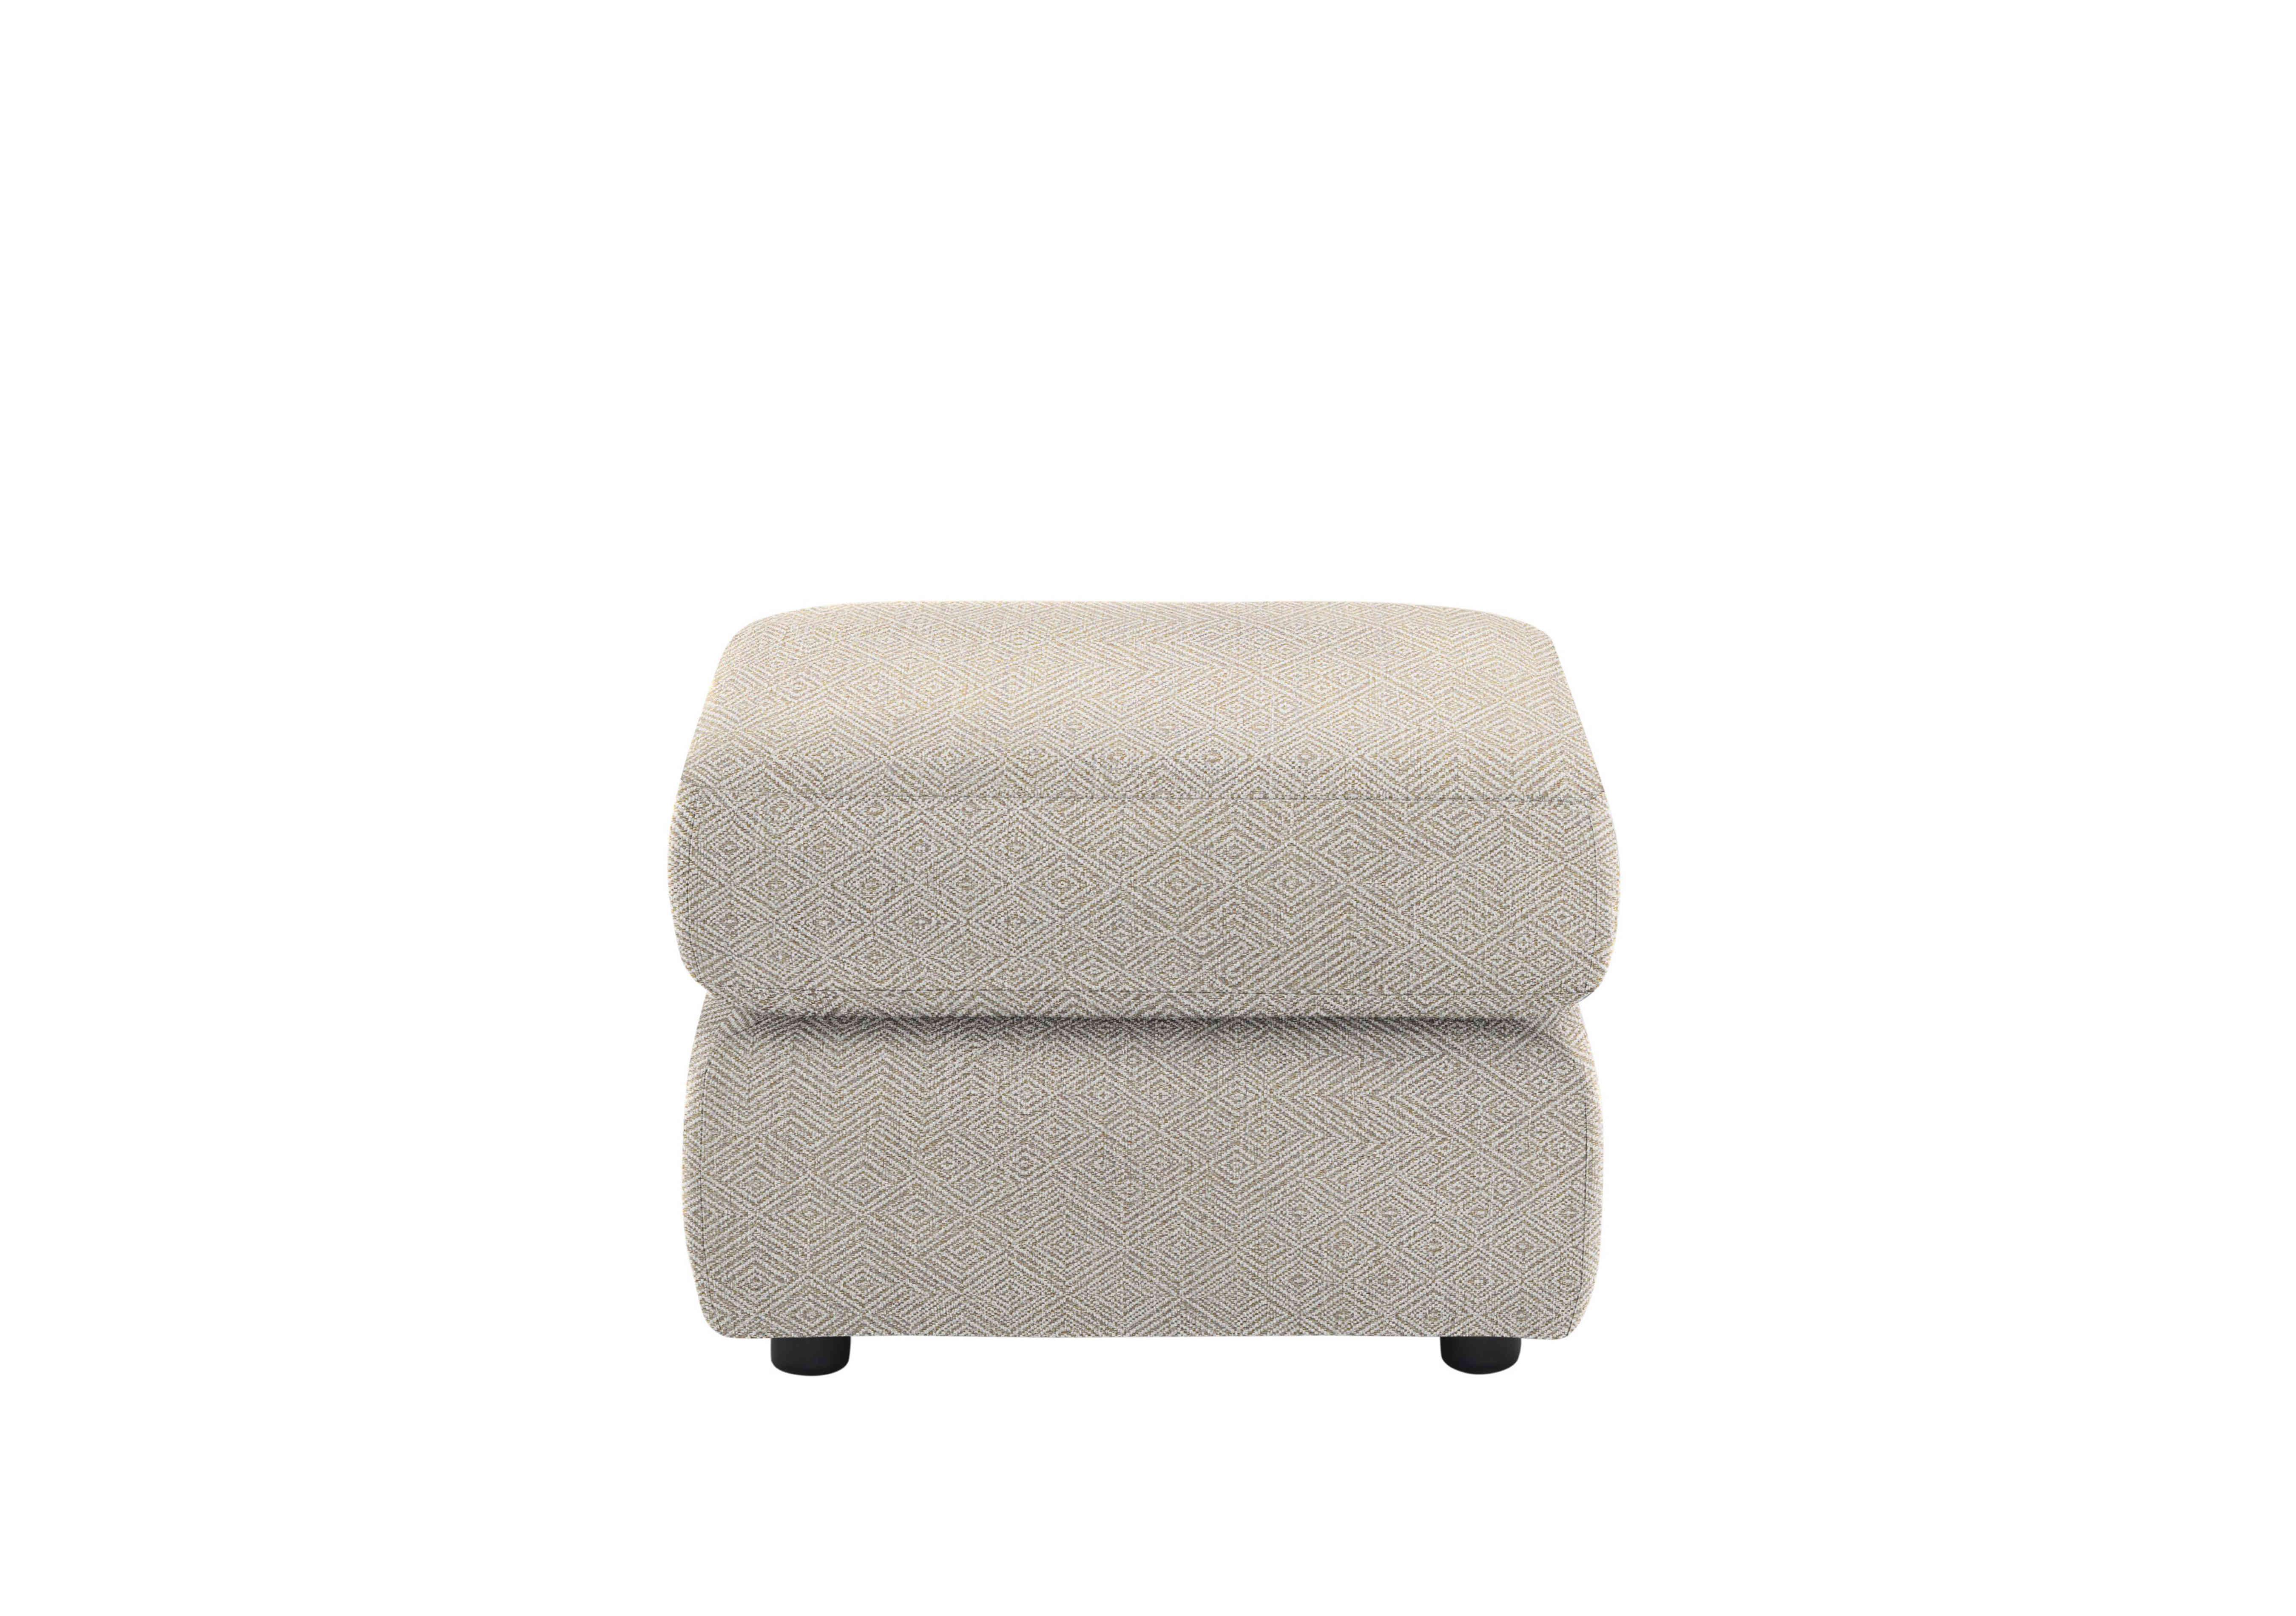 Avon Fabric Footstool in B011 Nebular Blush on Furniture Village